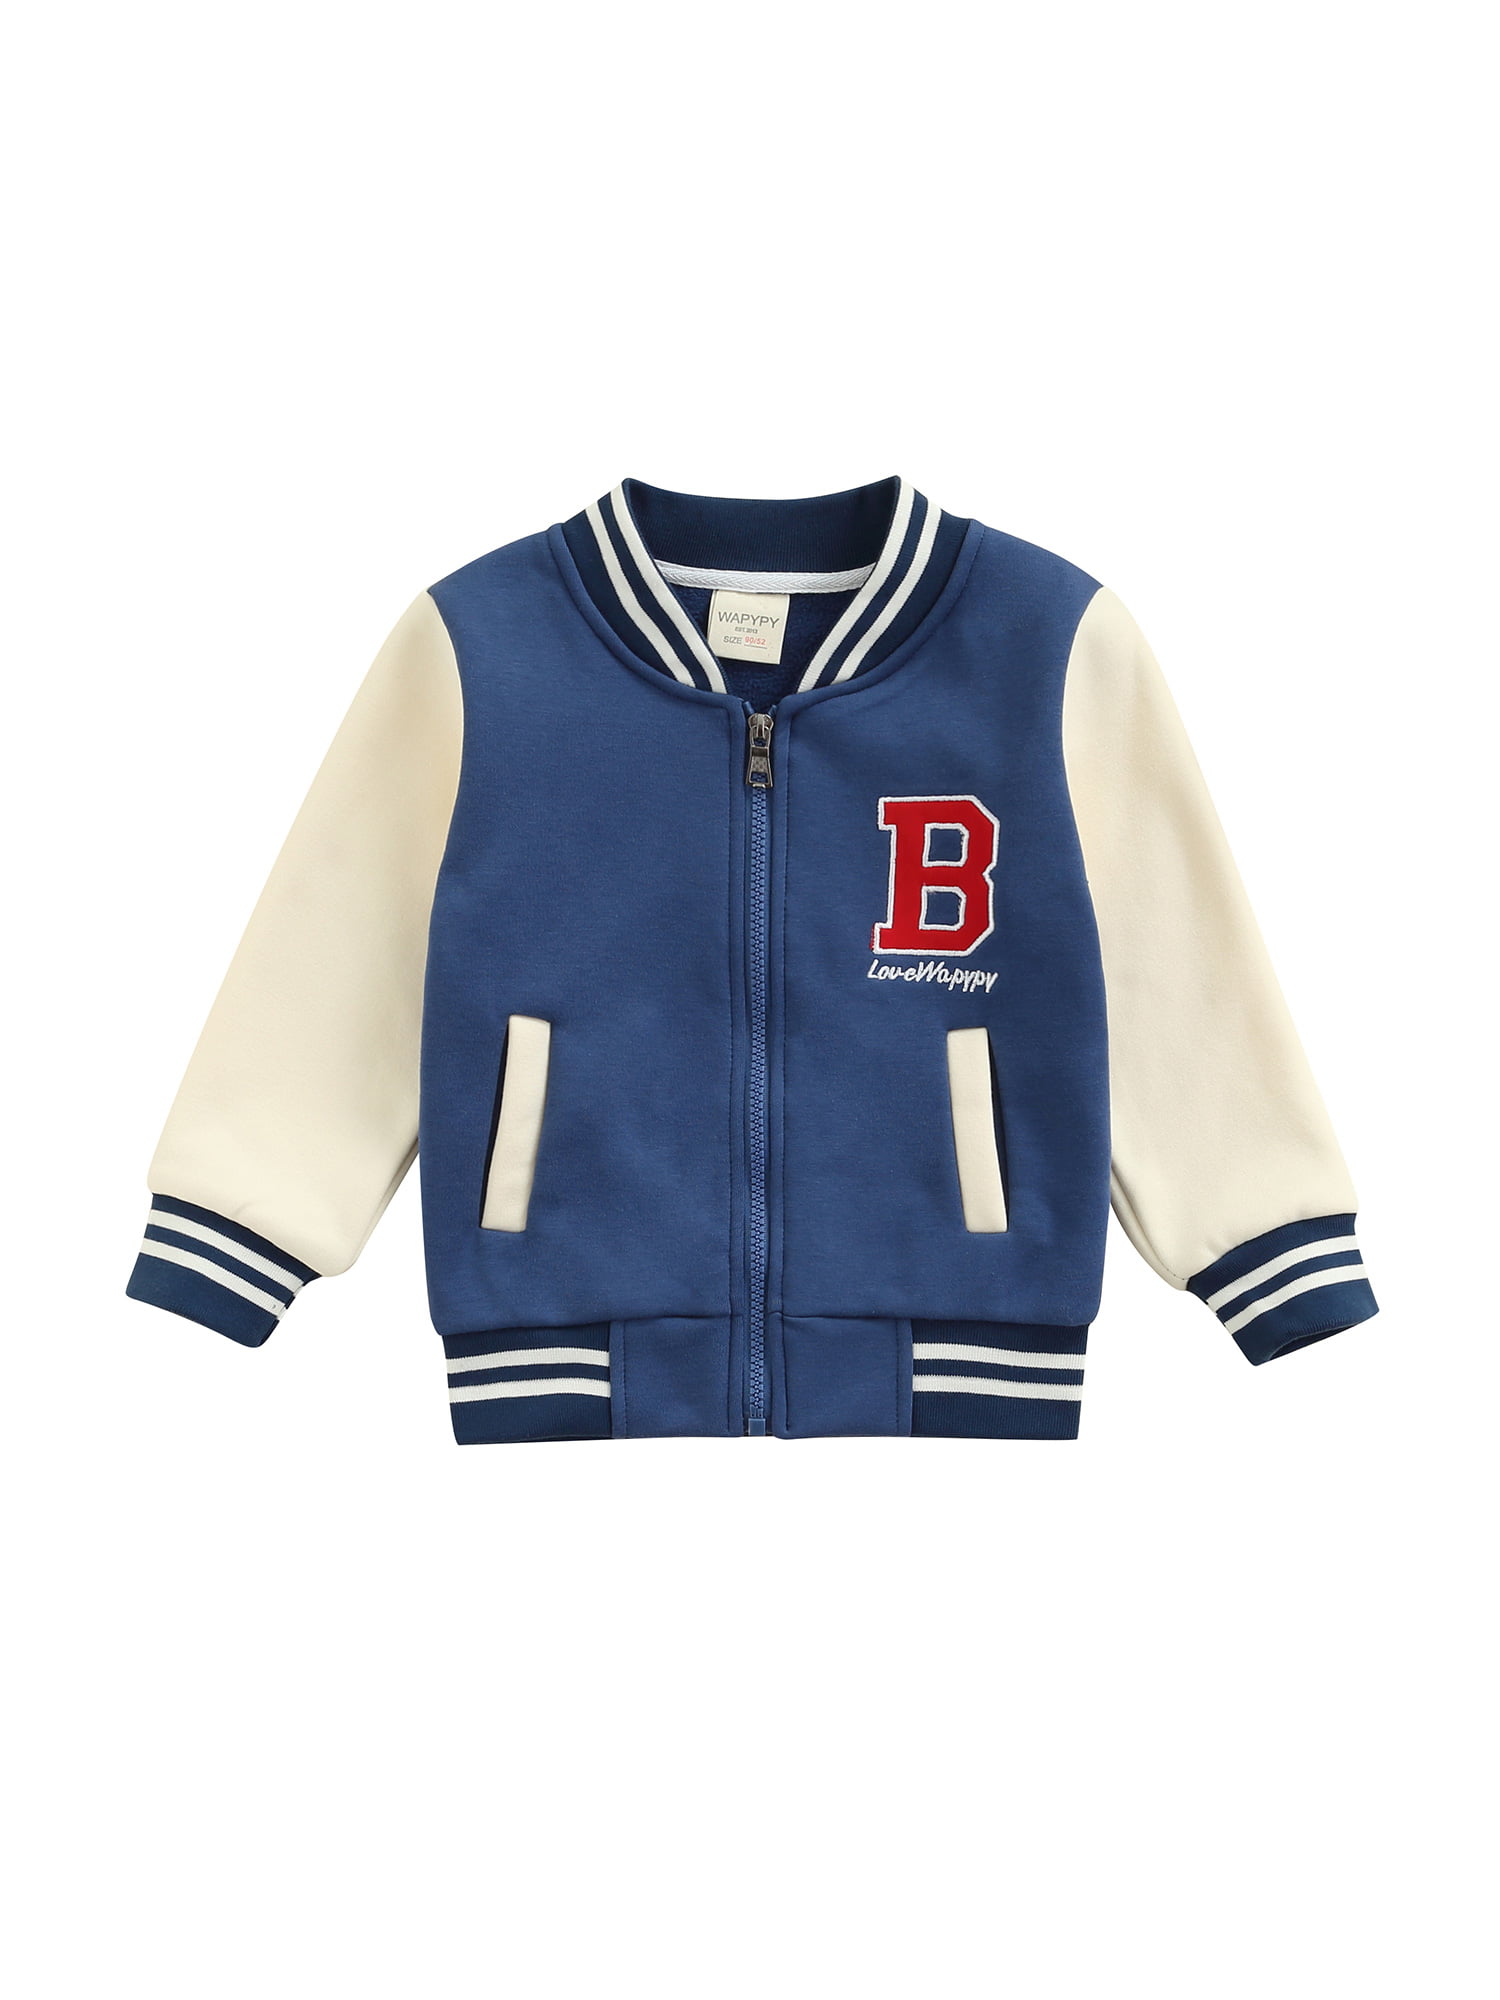 Biekopu Girls Boys Baseball Bomber Jacket Long Sleeve Block Sweatshirts Varsity Style School Jackets (Navy Blue, 2-3T) -